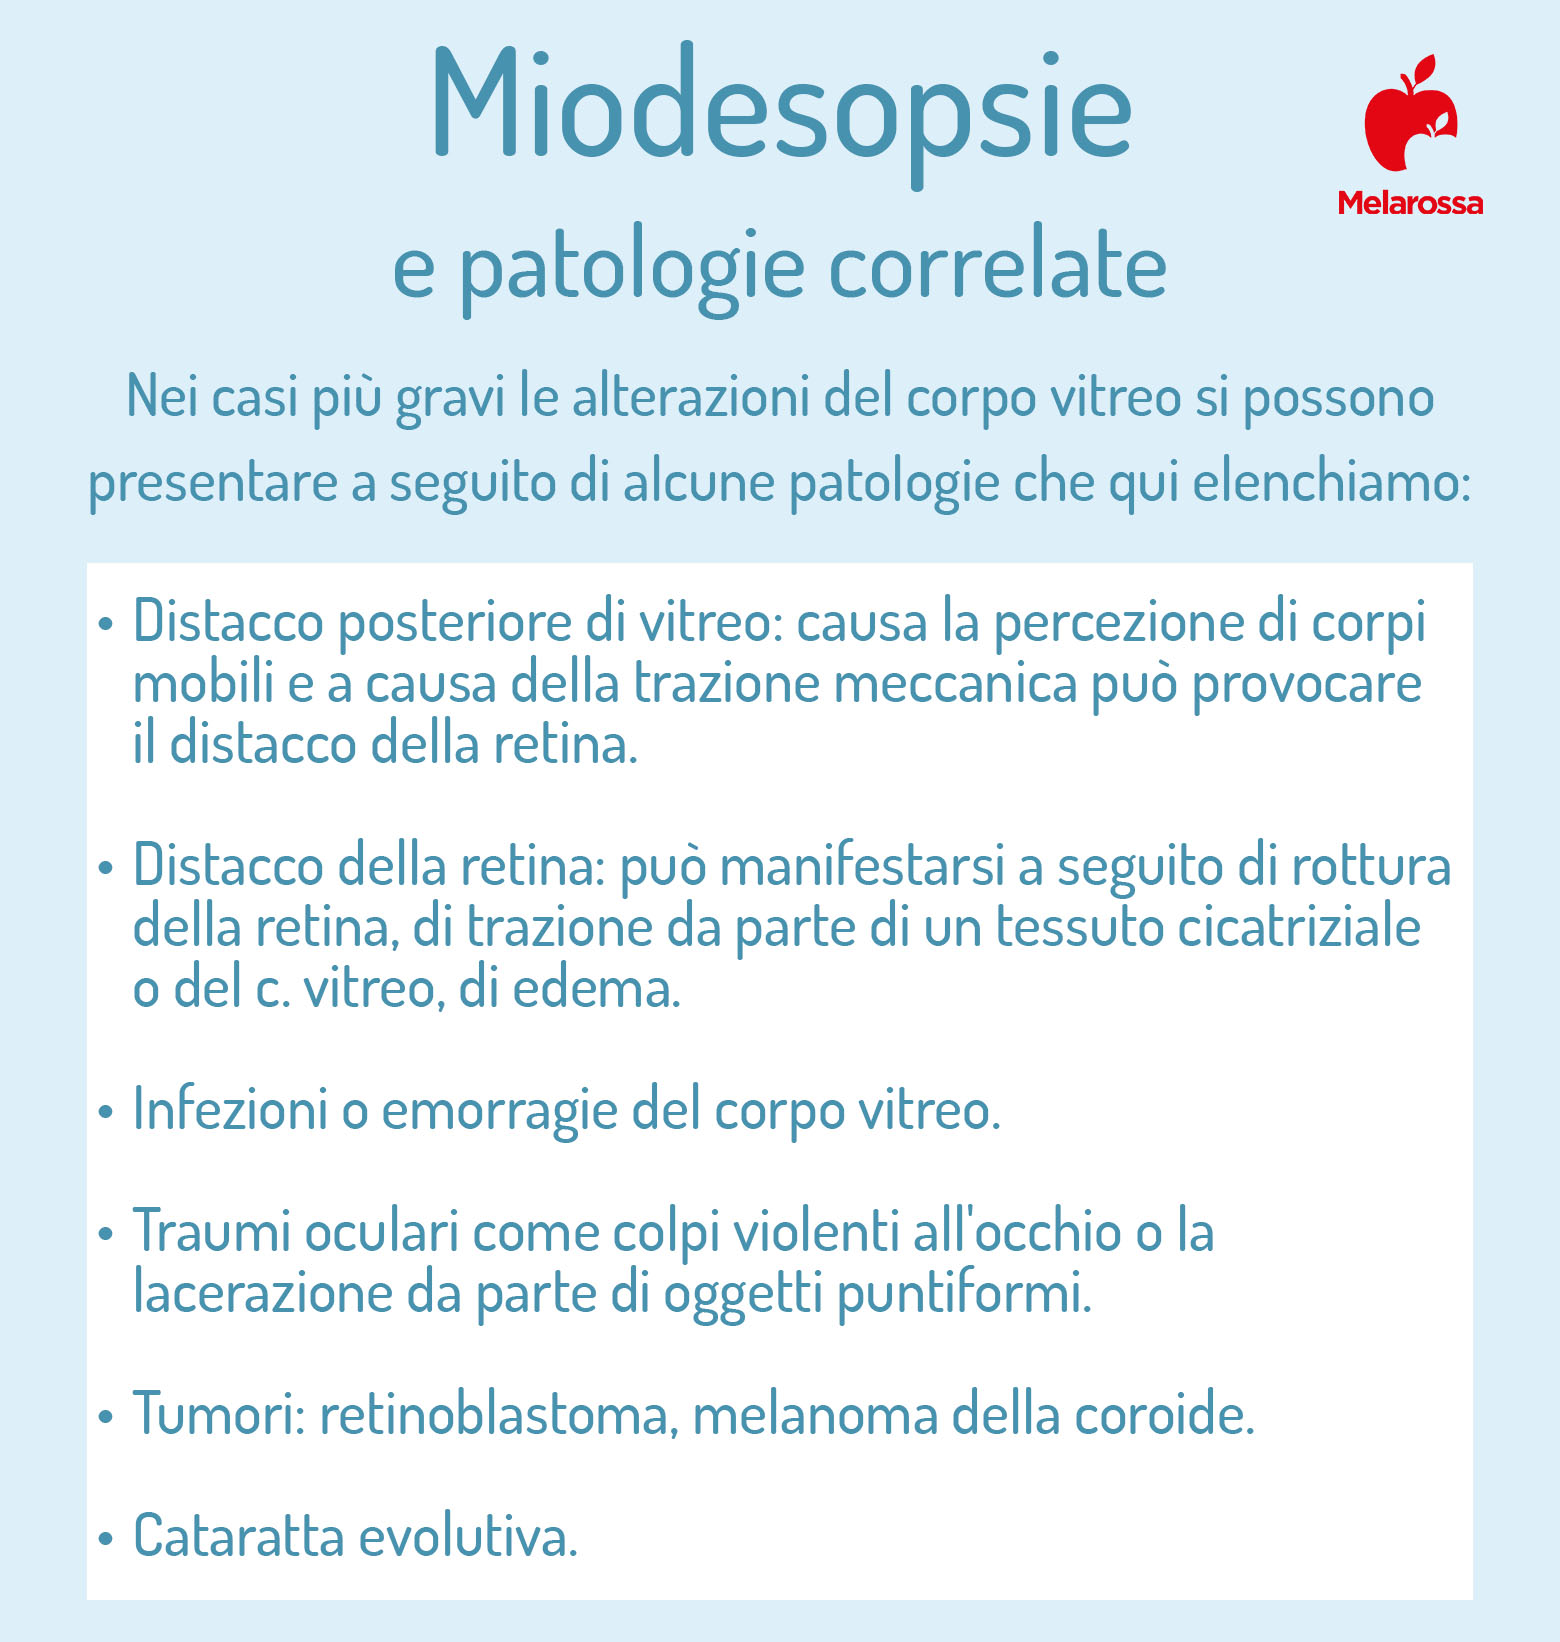 miodesopsie: patologie correlate